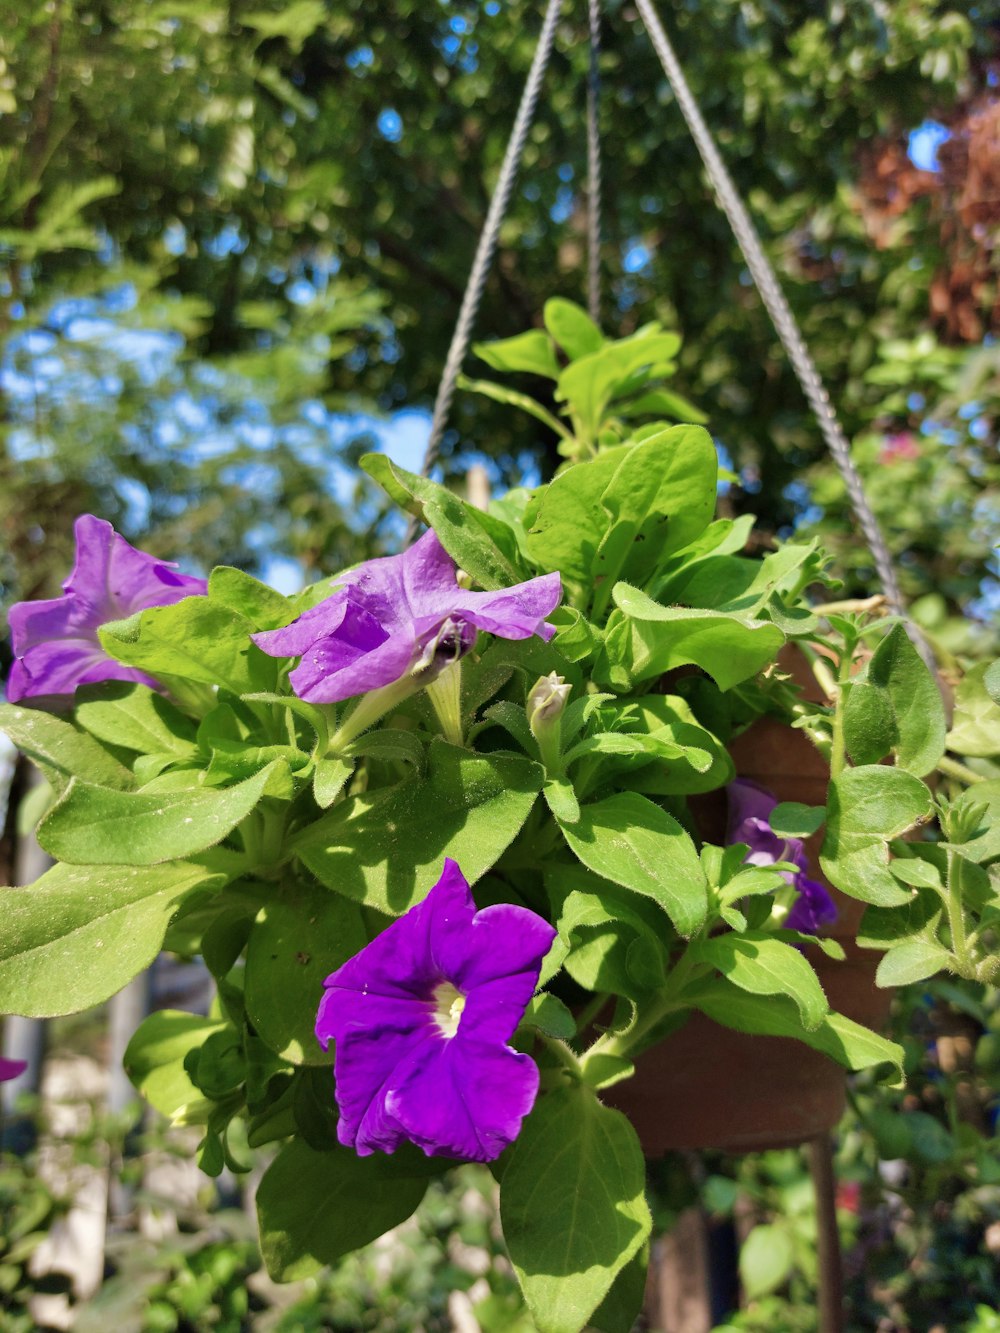 a hanging basket of purple flowers in a garden